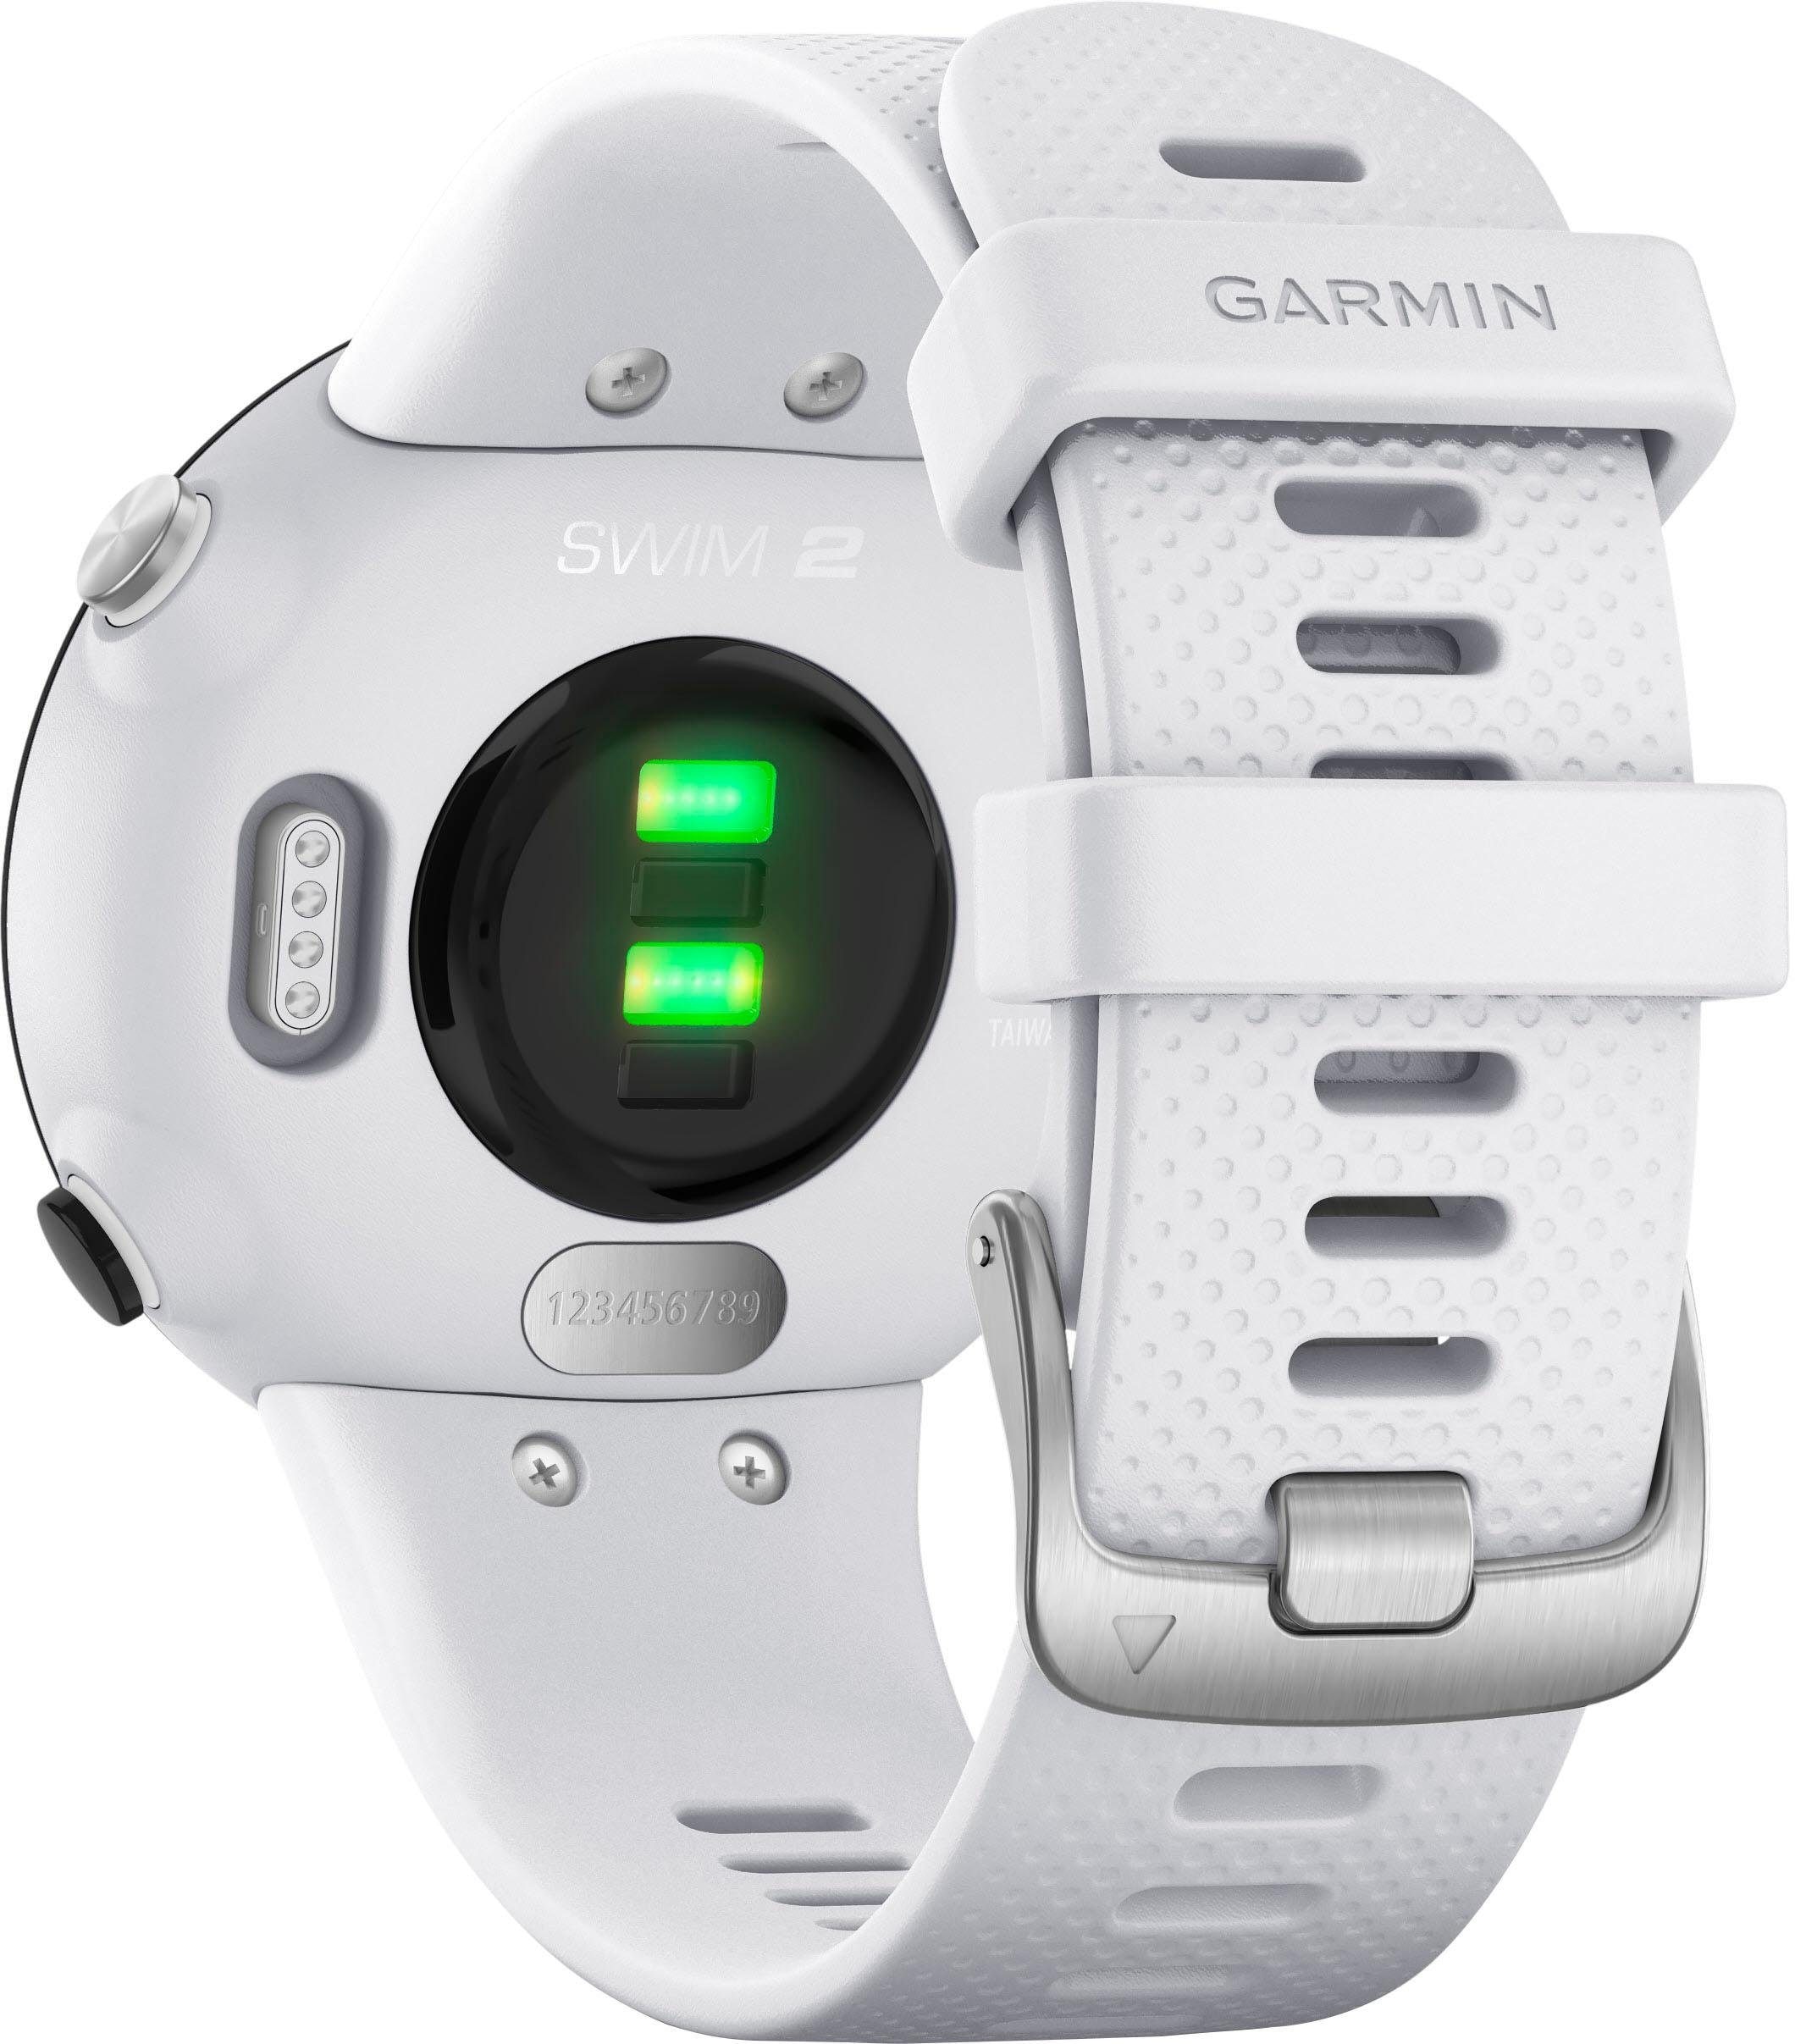 »Swim2 XXL mit Garmin Silikon-Armband ➥ 20 3 | Jahre Garantie UNIVERSAL mm« Smartwatch